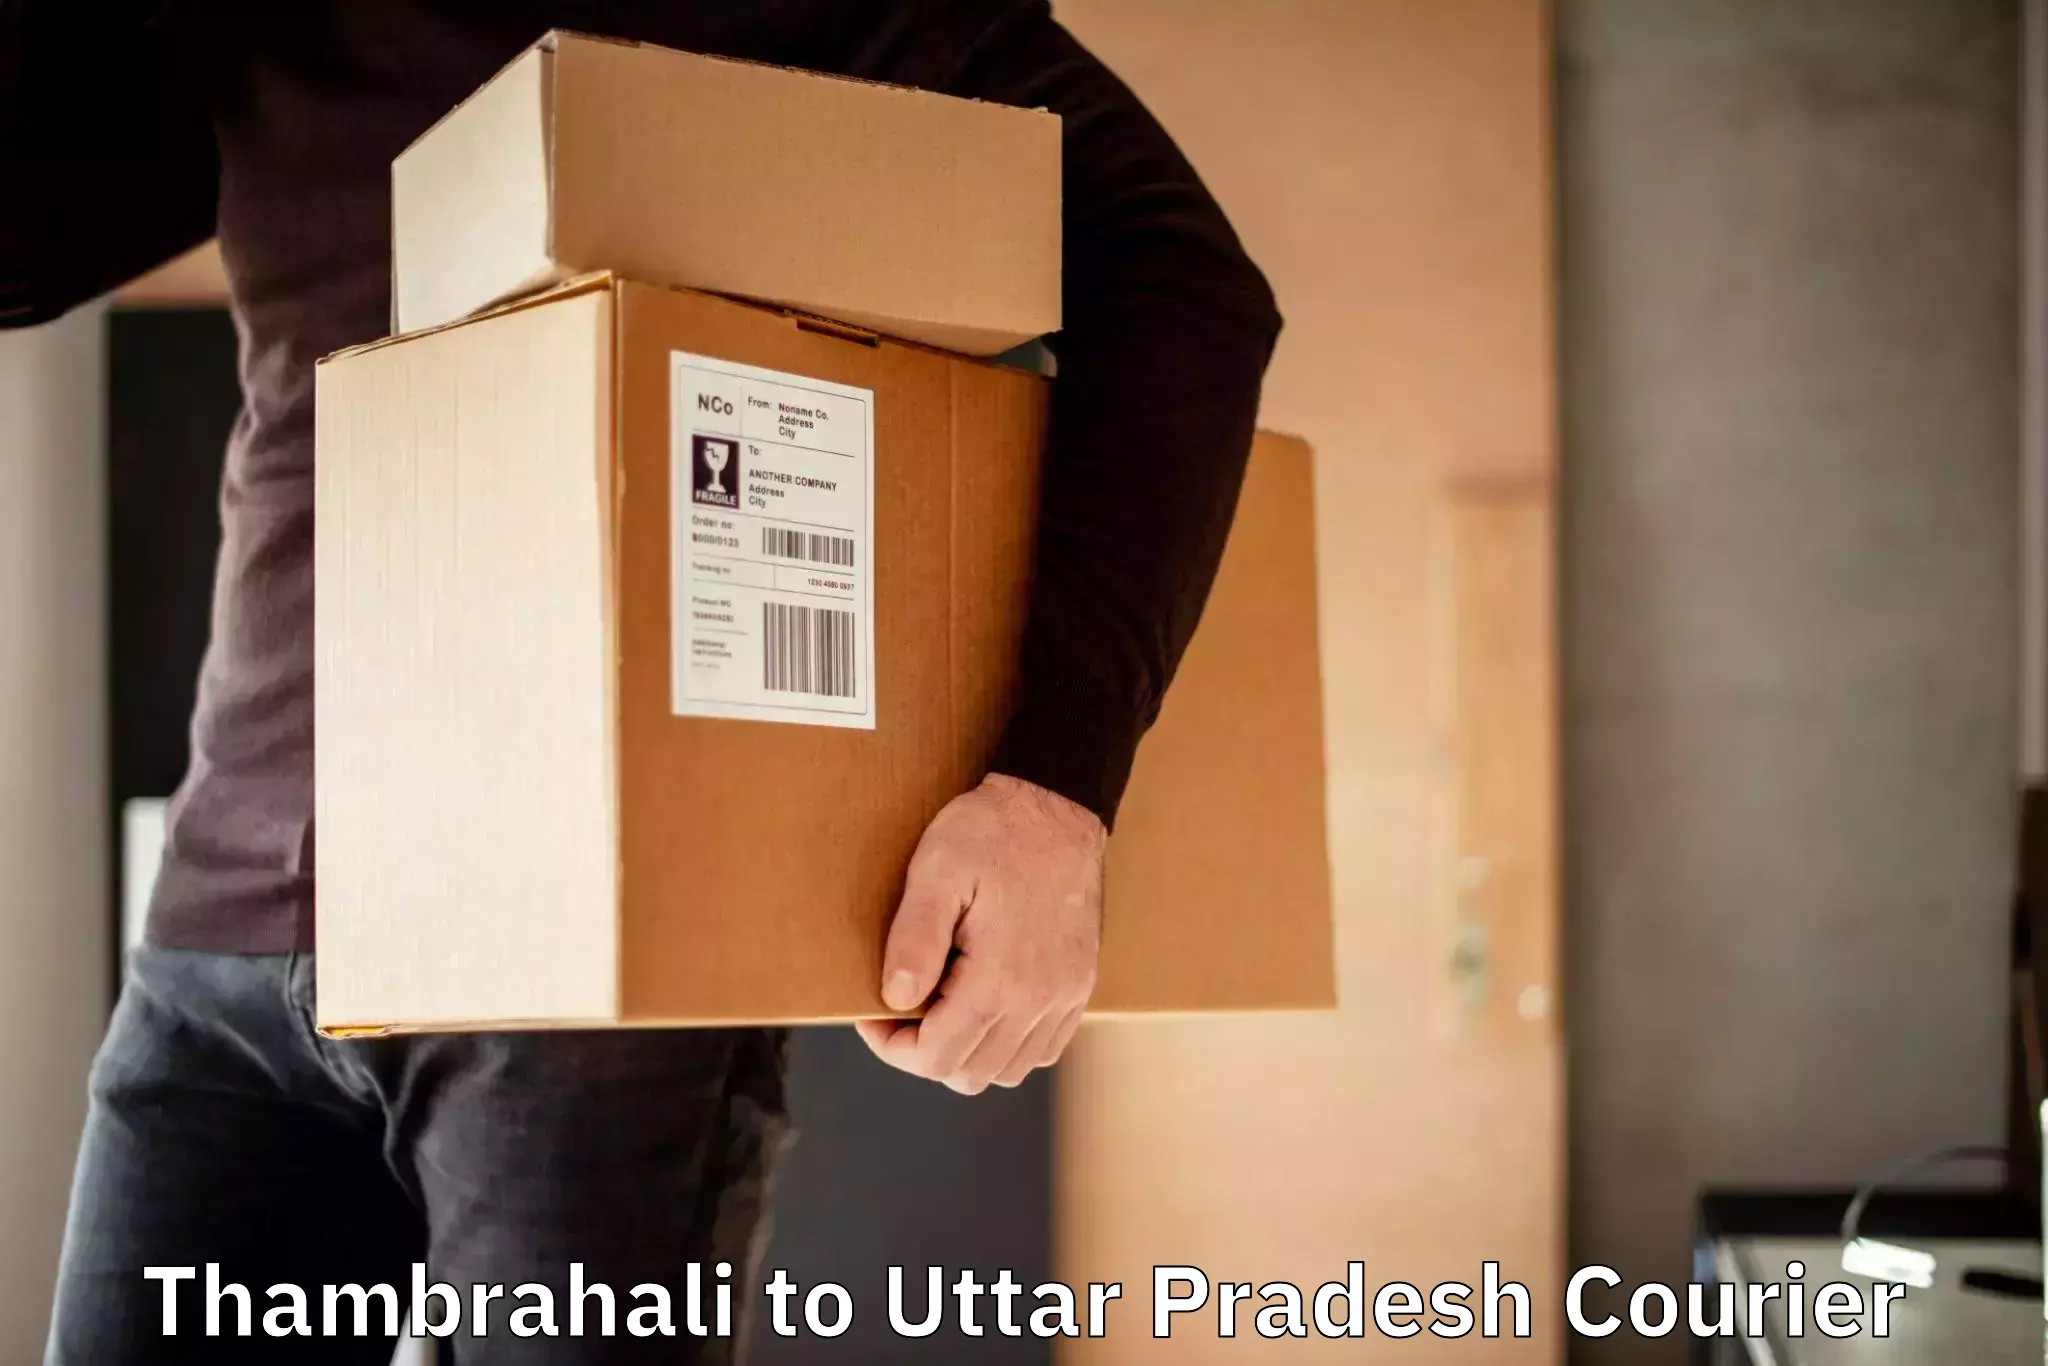 Quick dispatch service Thambrahali to Uttar Pradesh